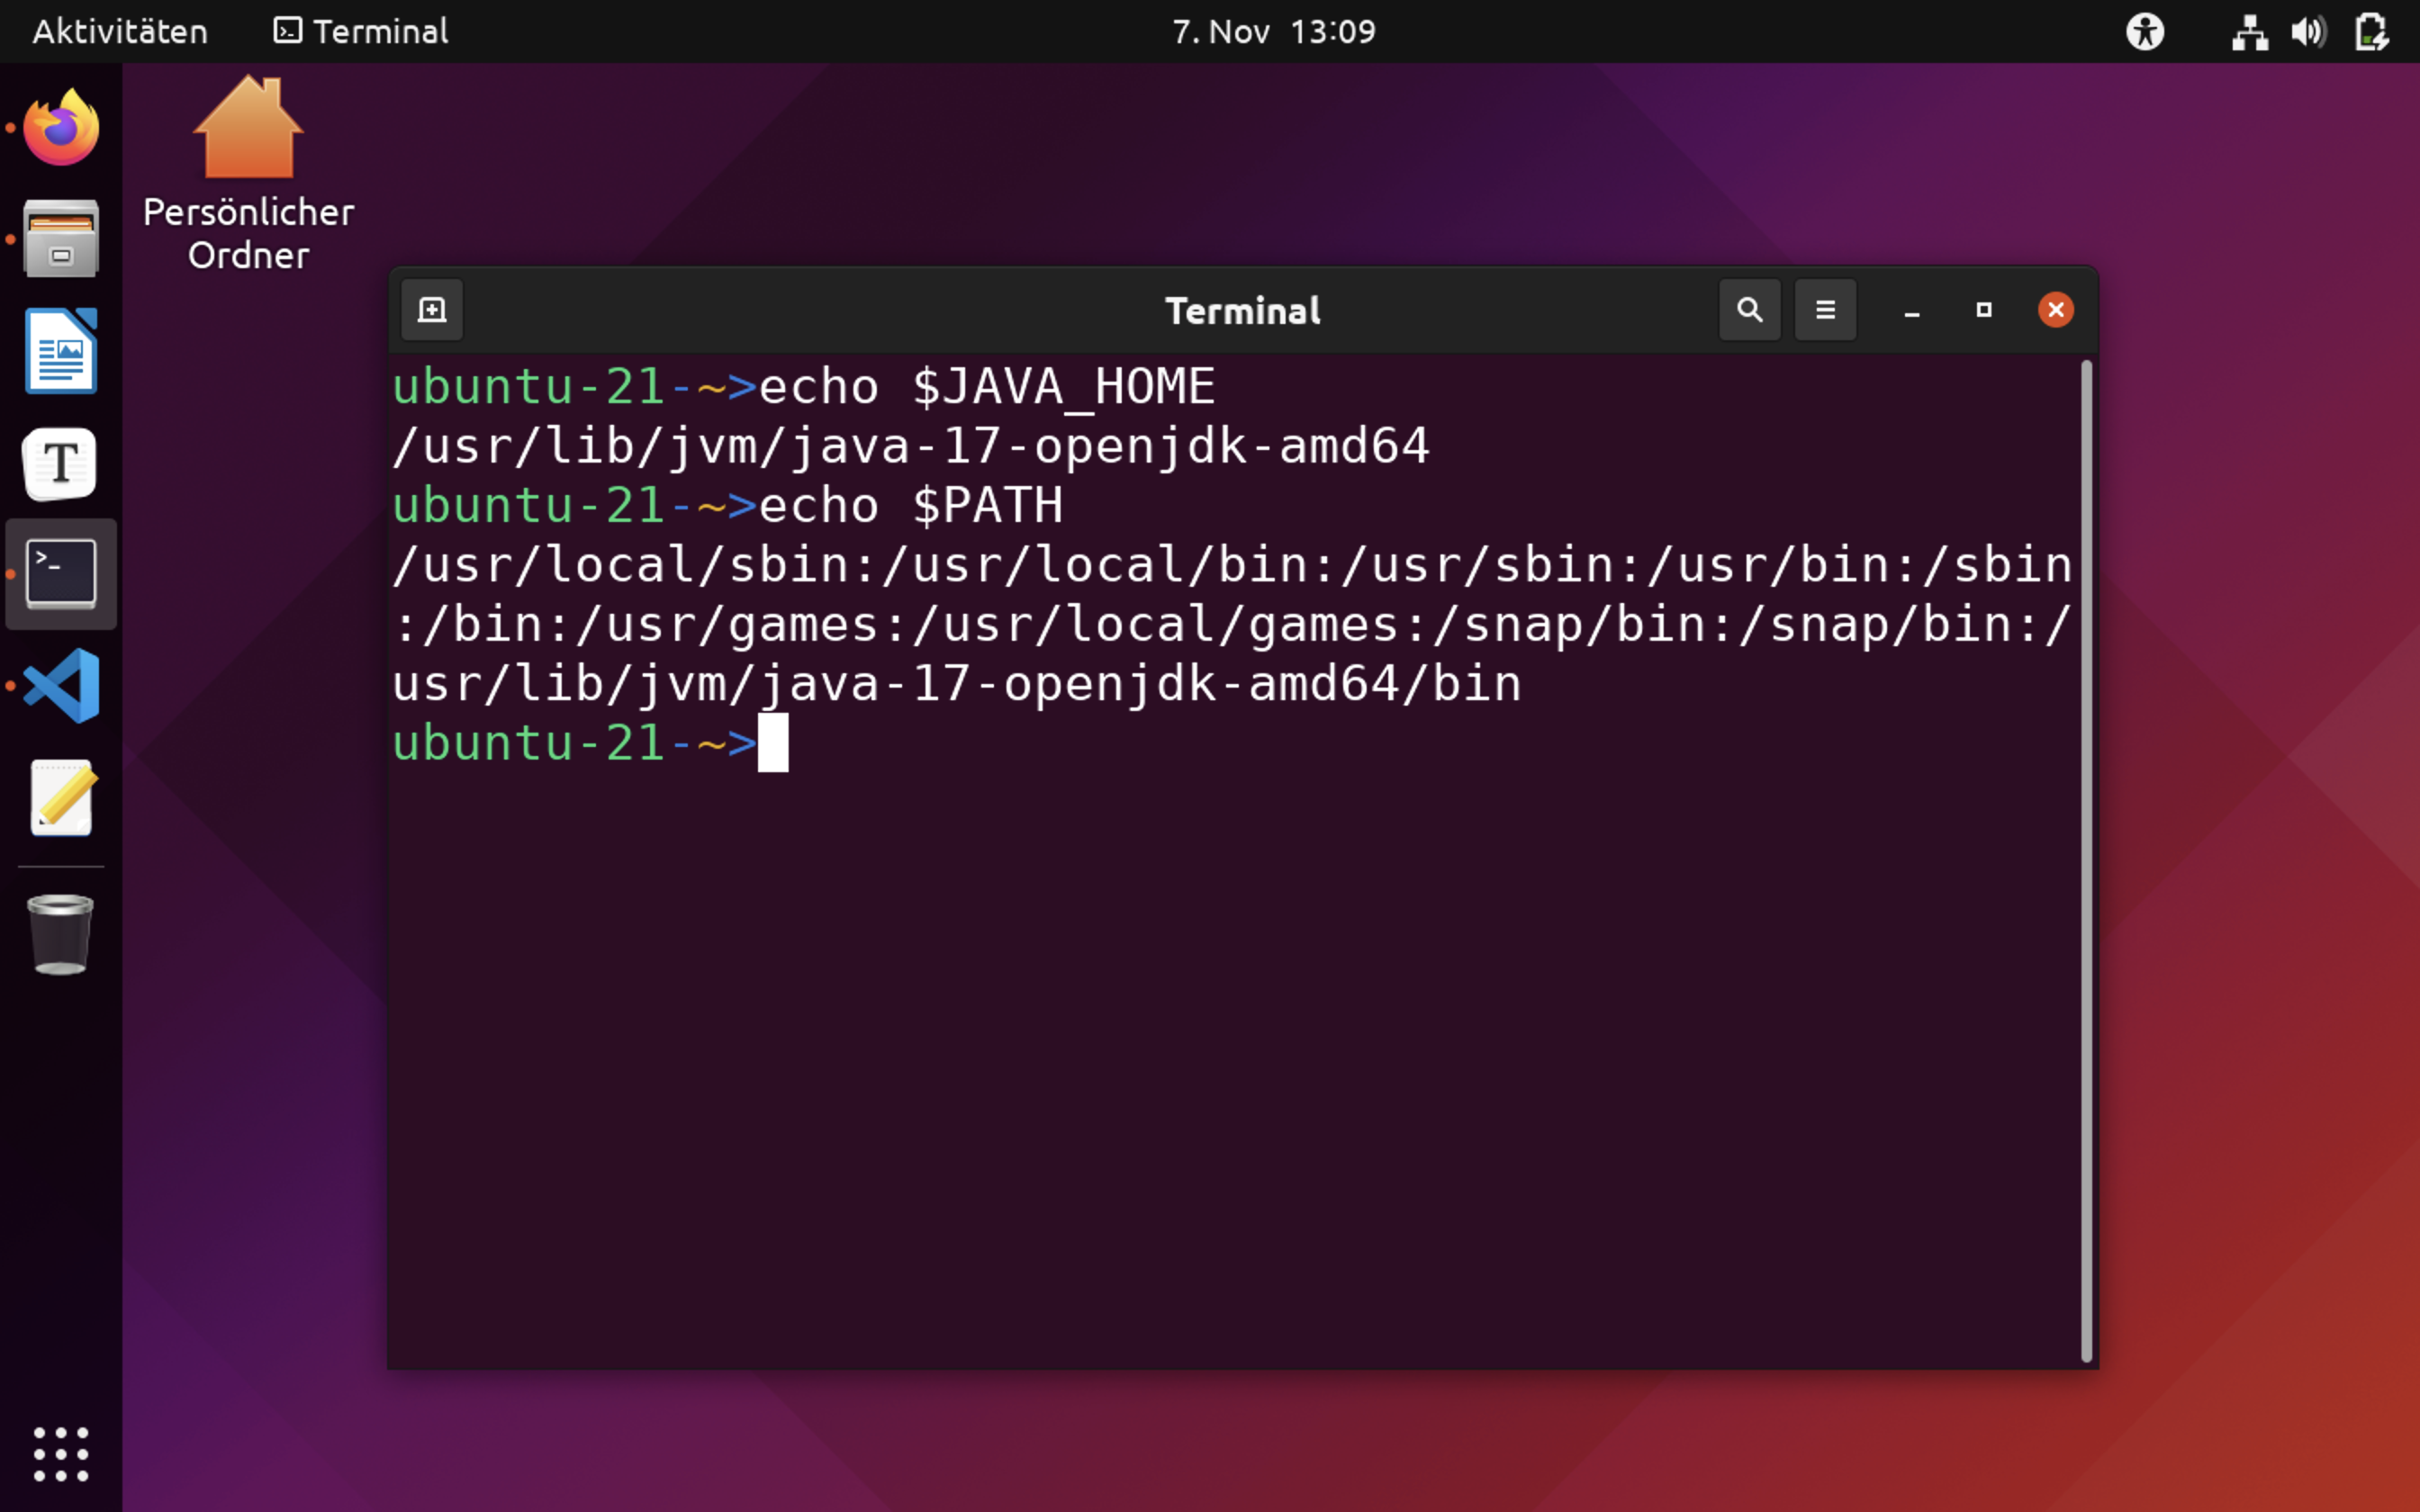 image-ubuntu-terminal-test-java-home-andpath